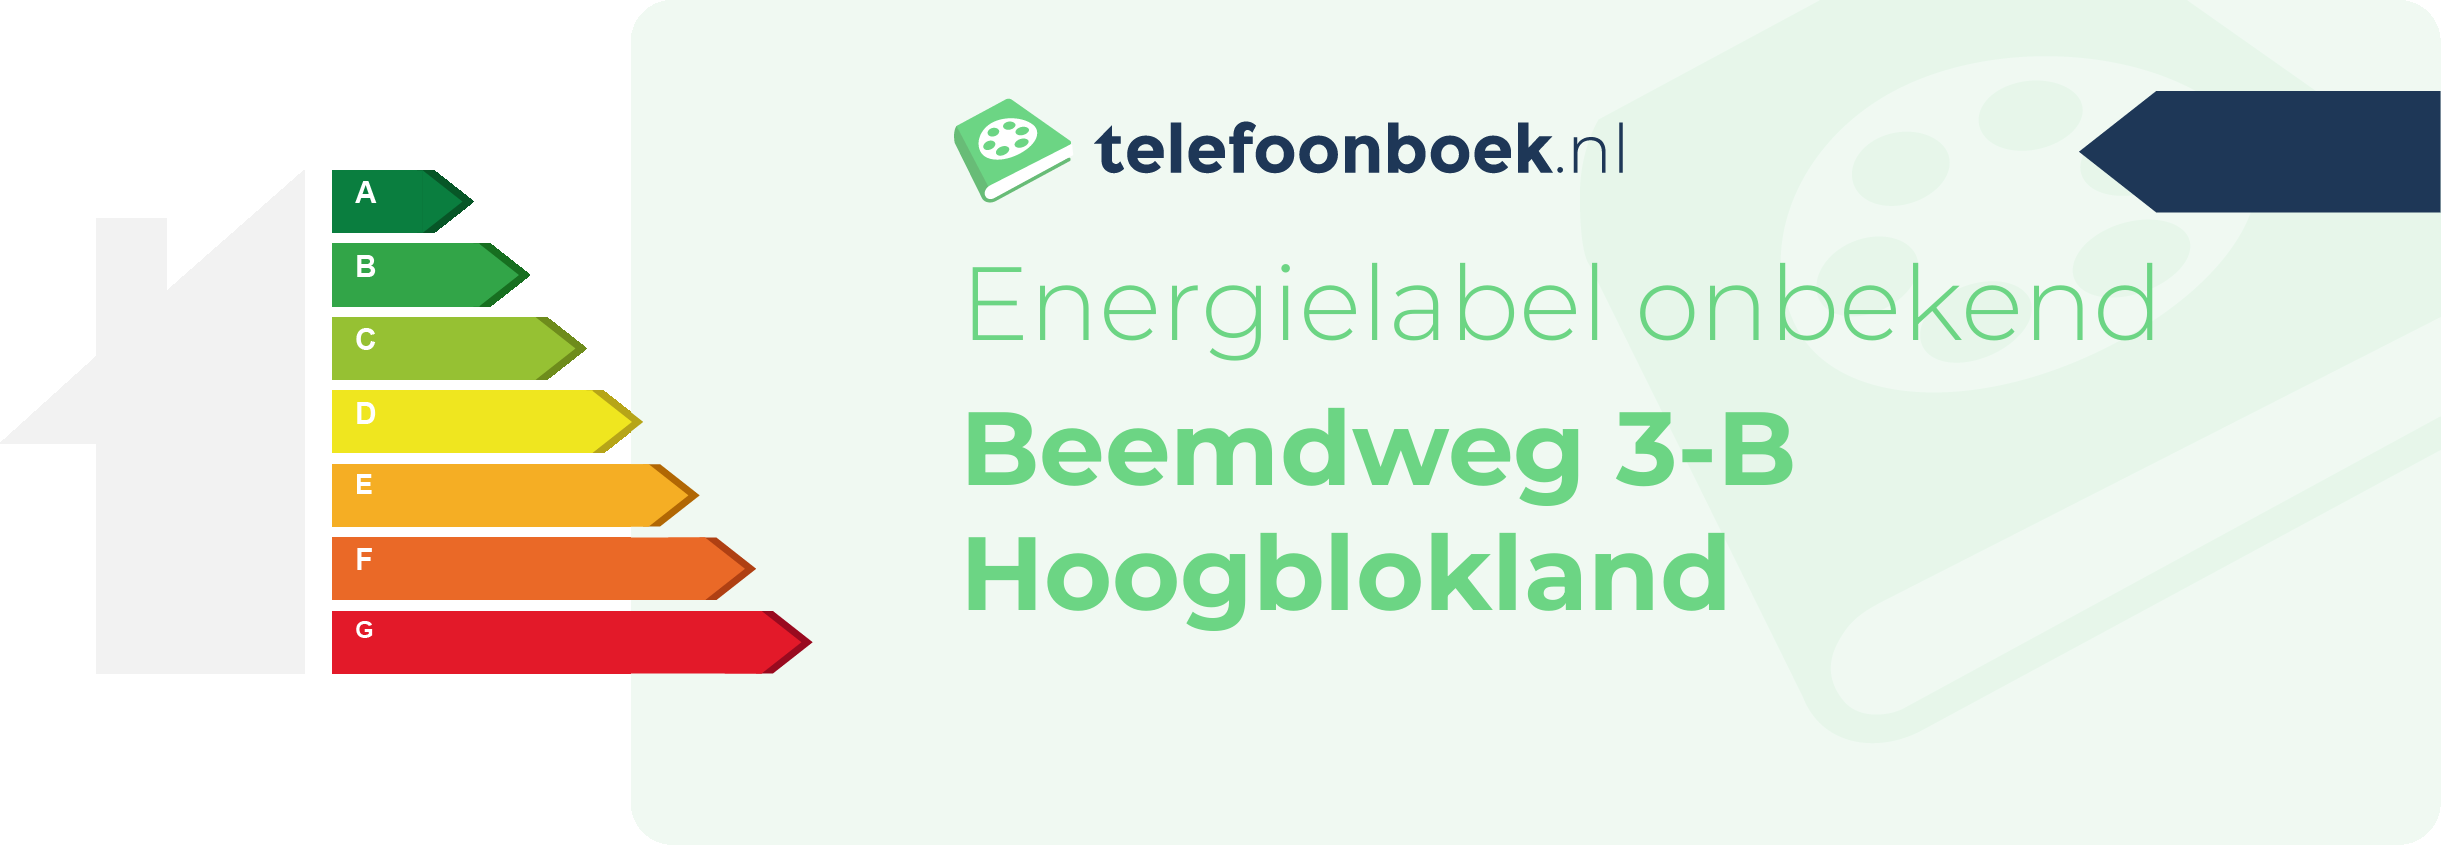 Energielabel Beemdweg 3-B Hoogblokland